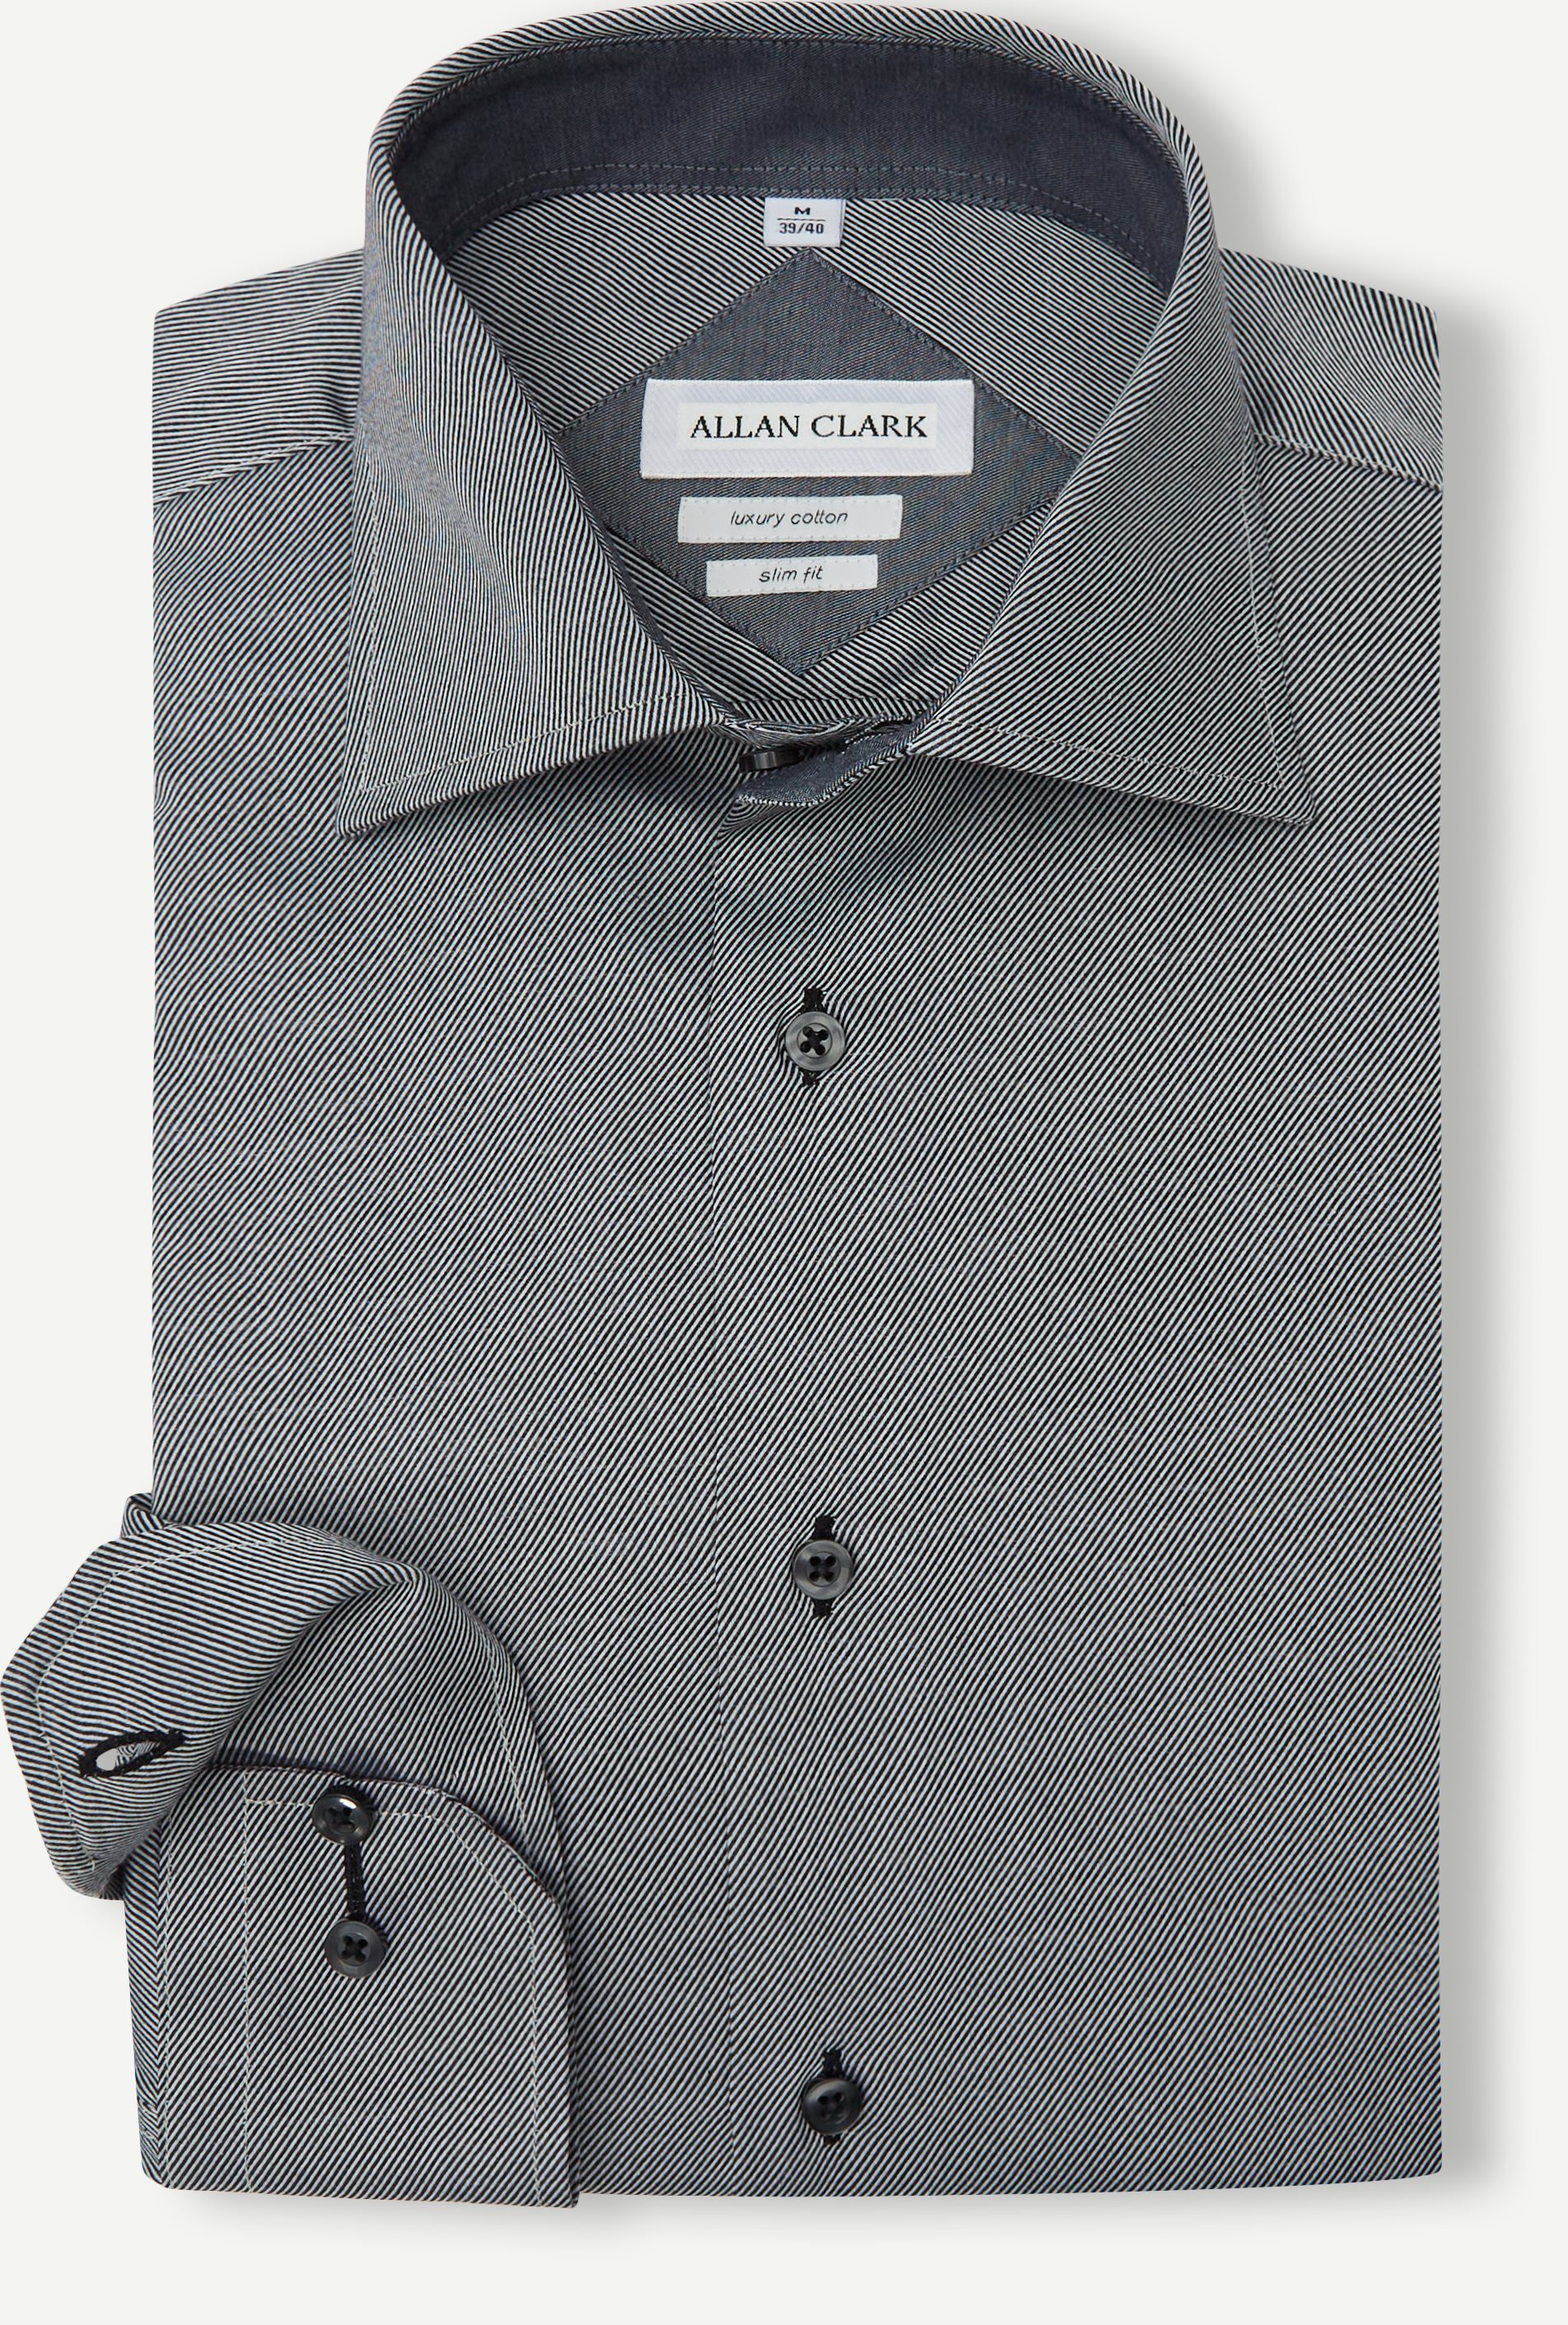 Allan Clark Shirts PRINCE Grey